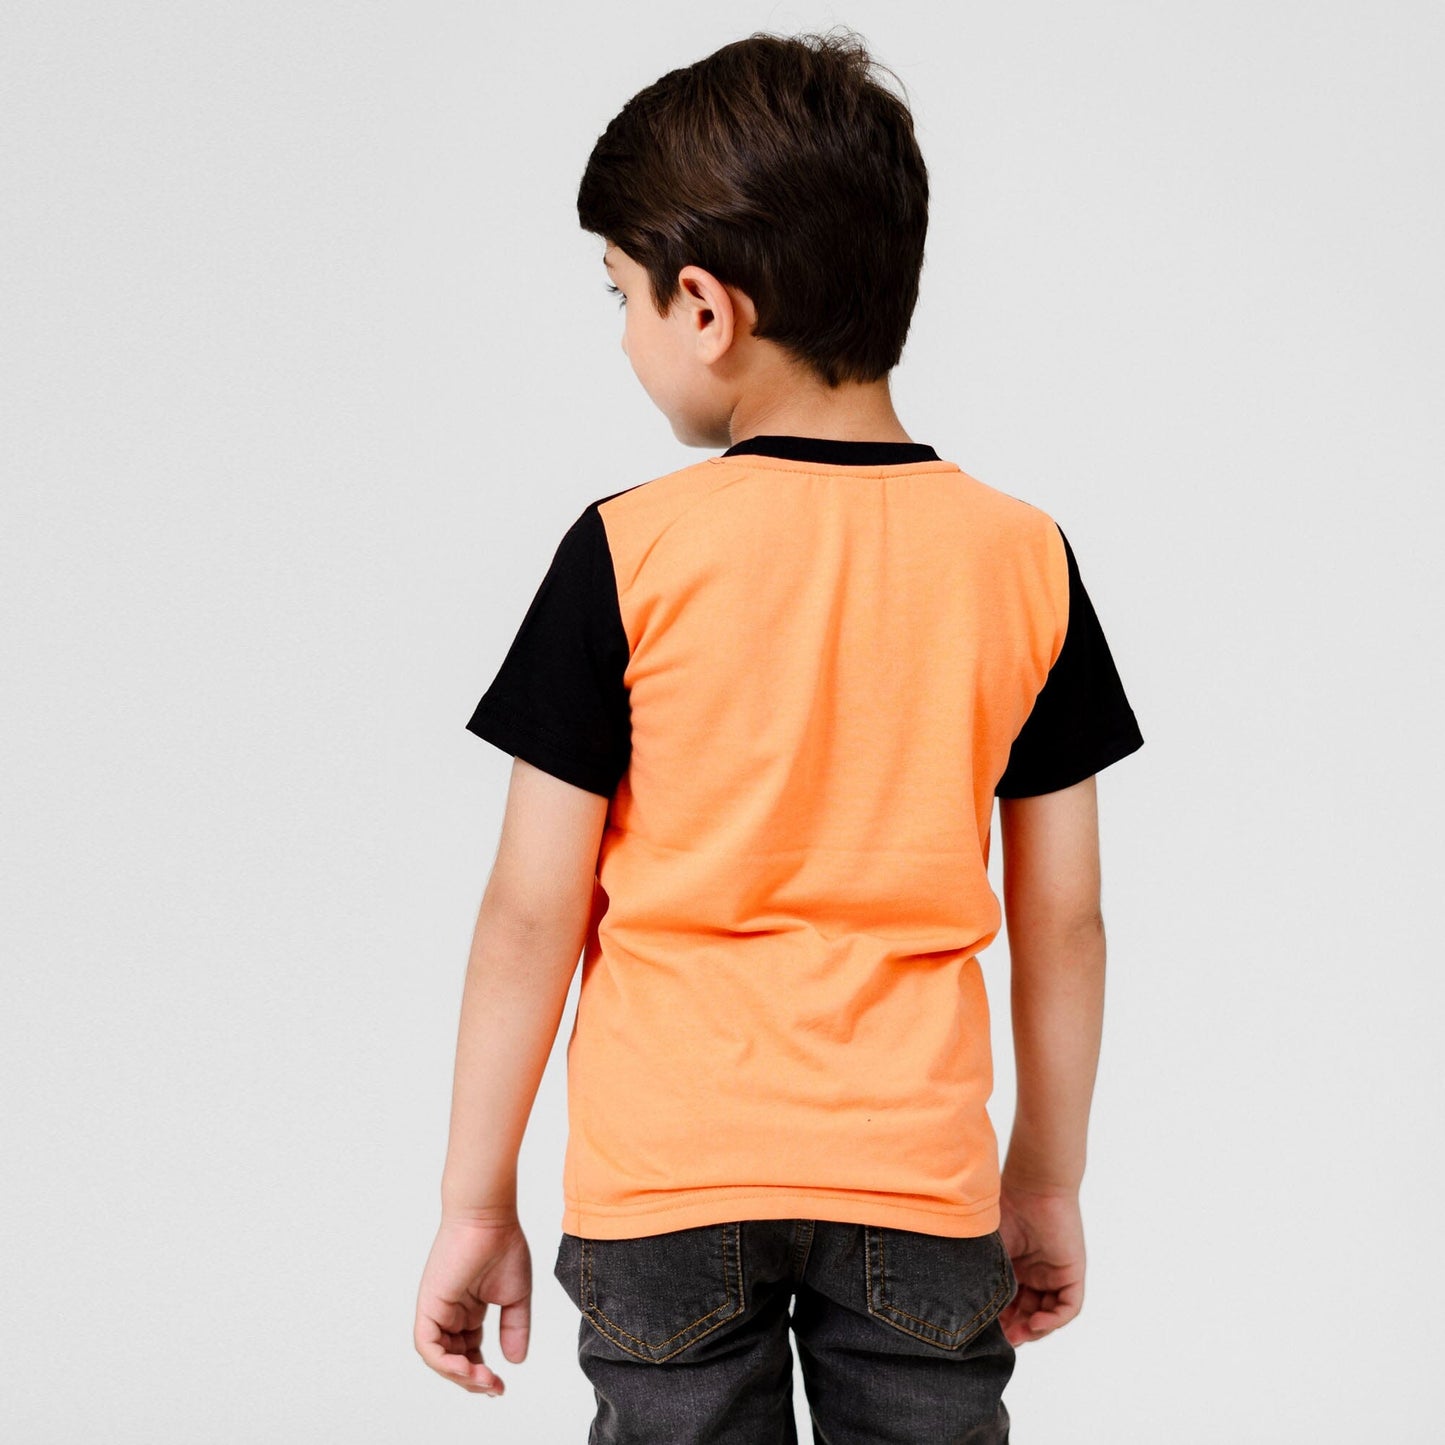 Cutie Kid's Waterford Tiger Printed Panel Design Tee Shirt Boy's Tee Shirt ZBC 